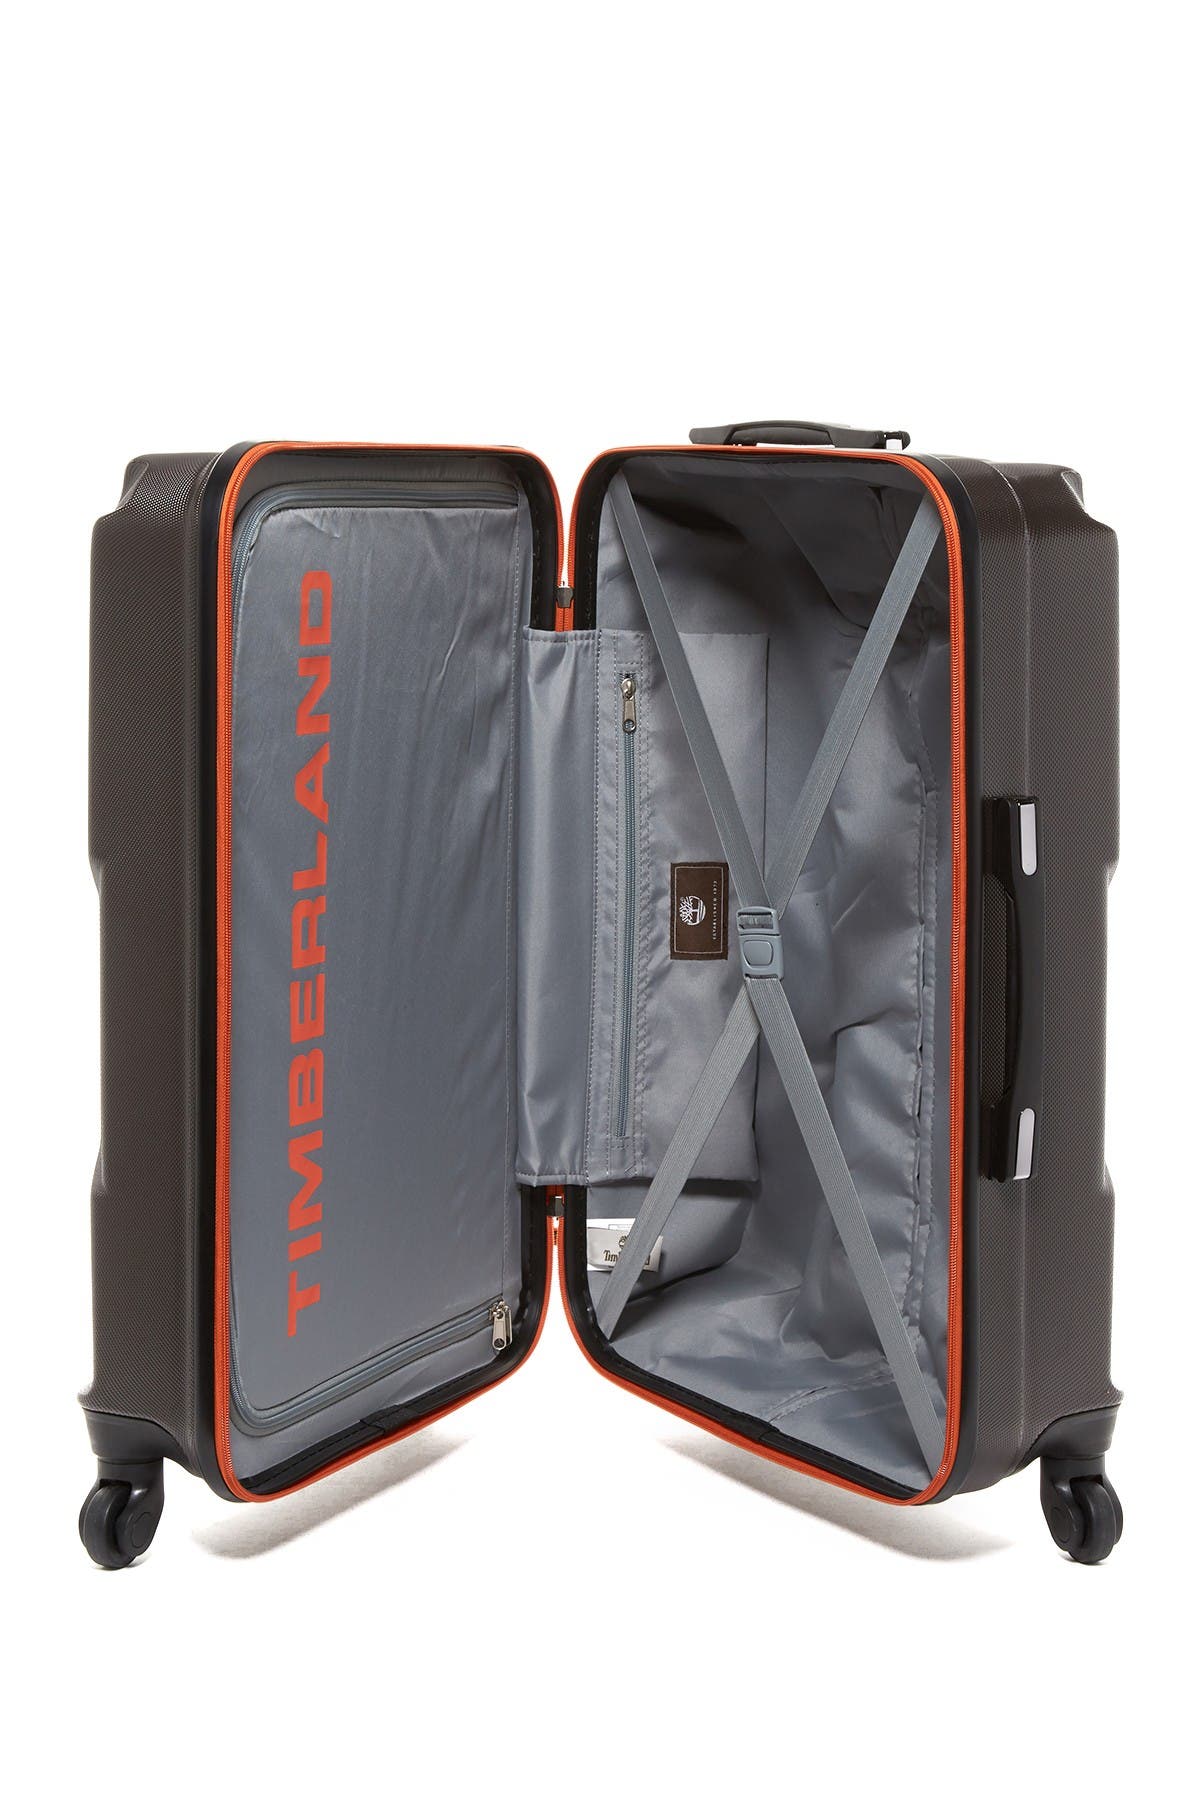 timberland boscawen suitcase